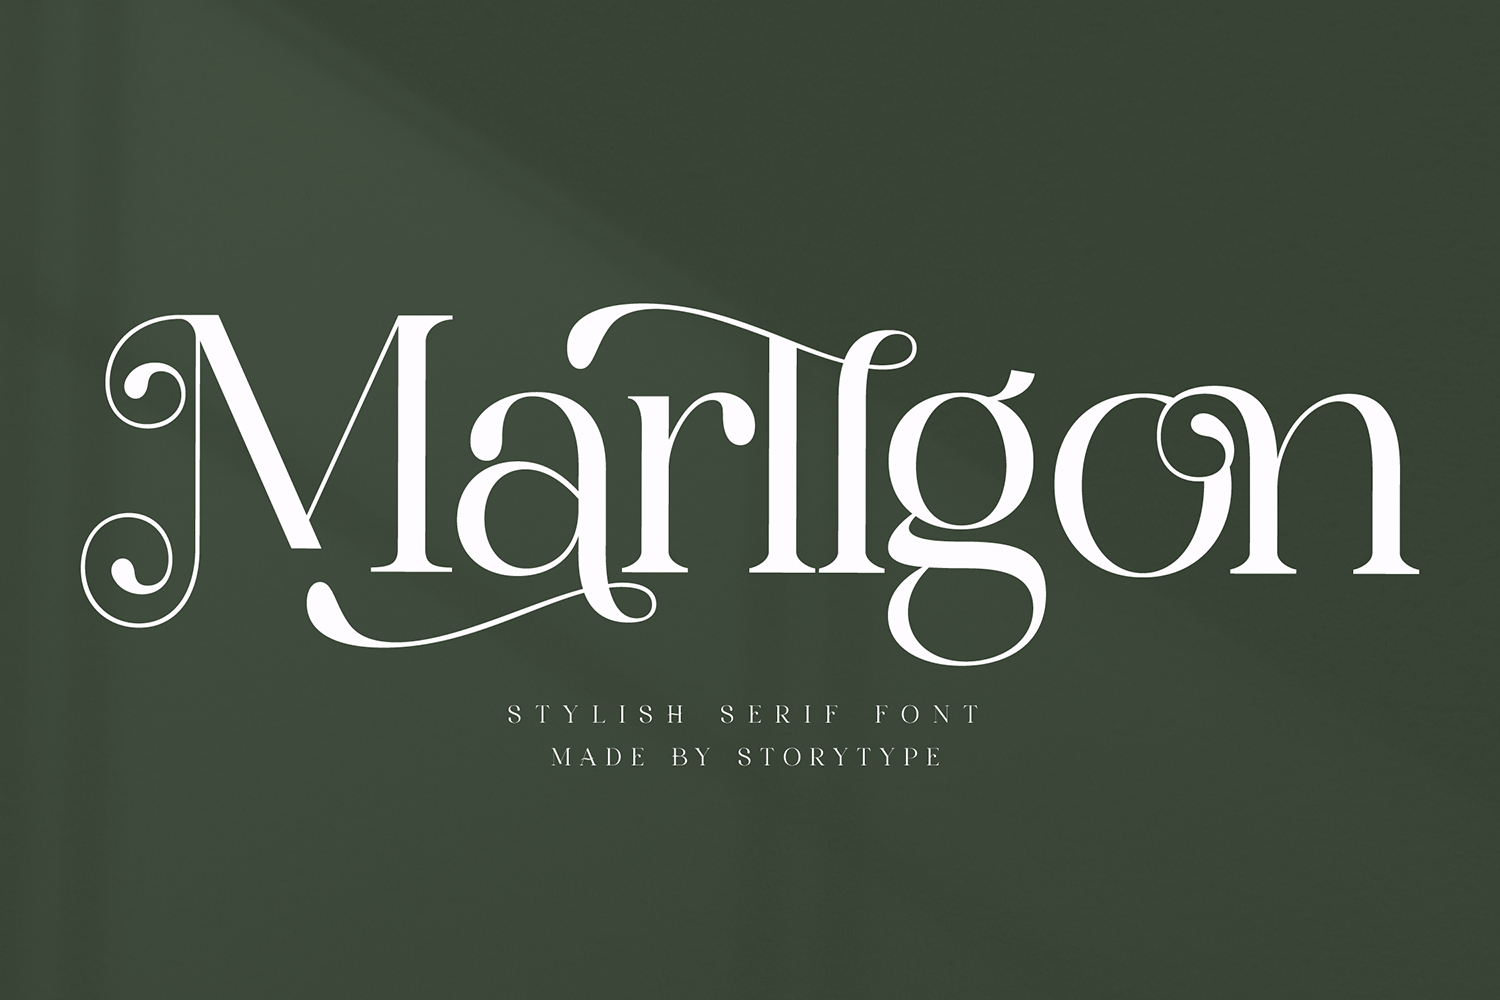 Marllgon Free Font